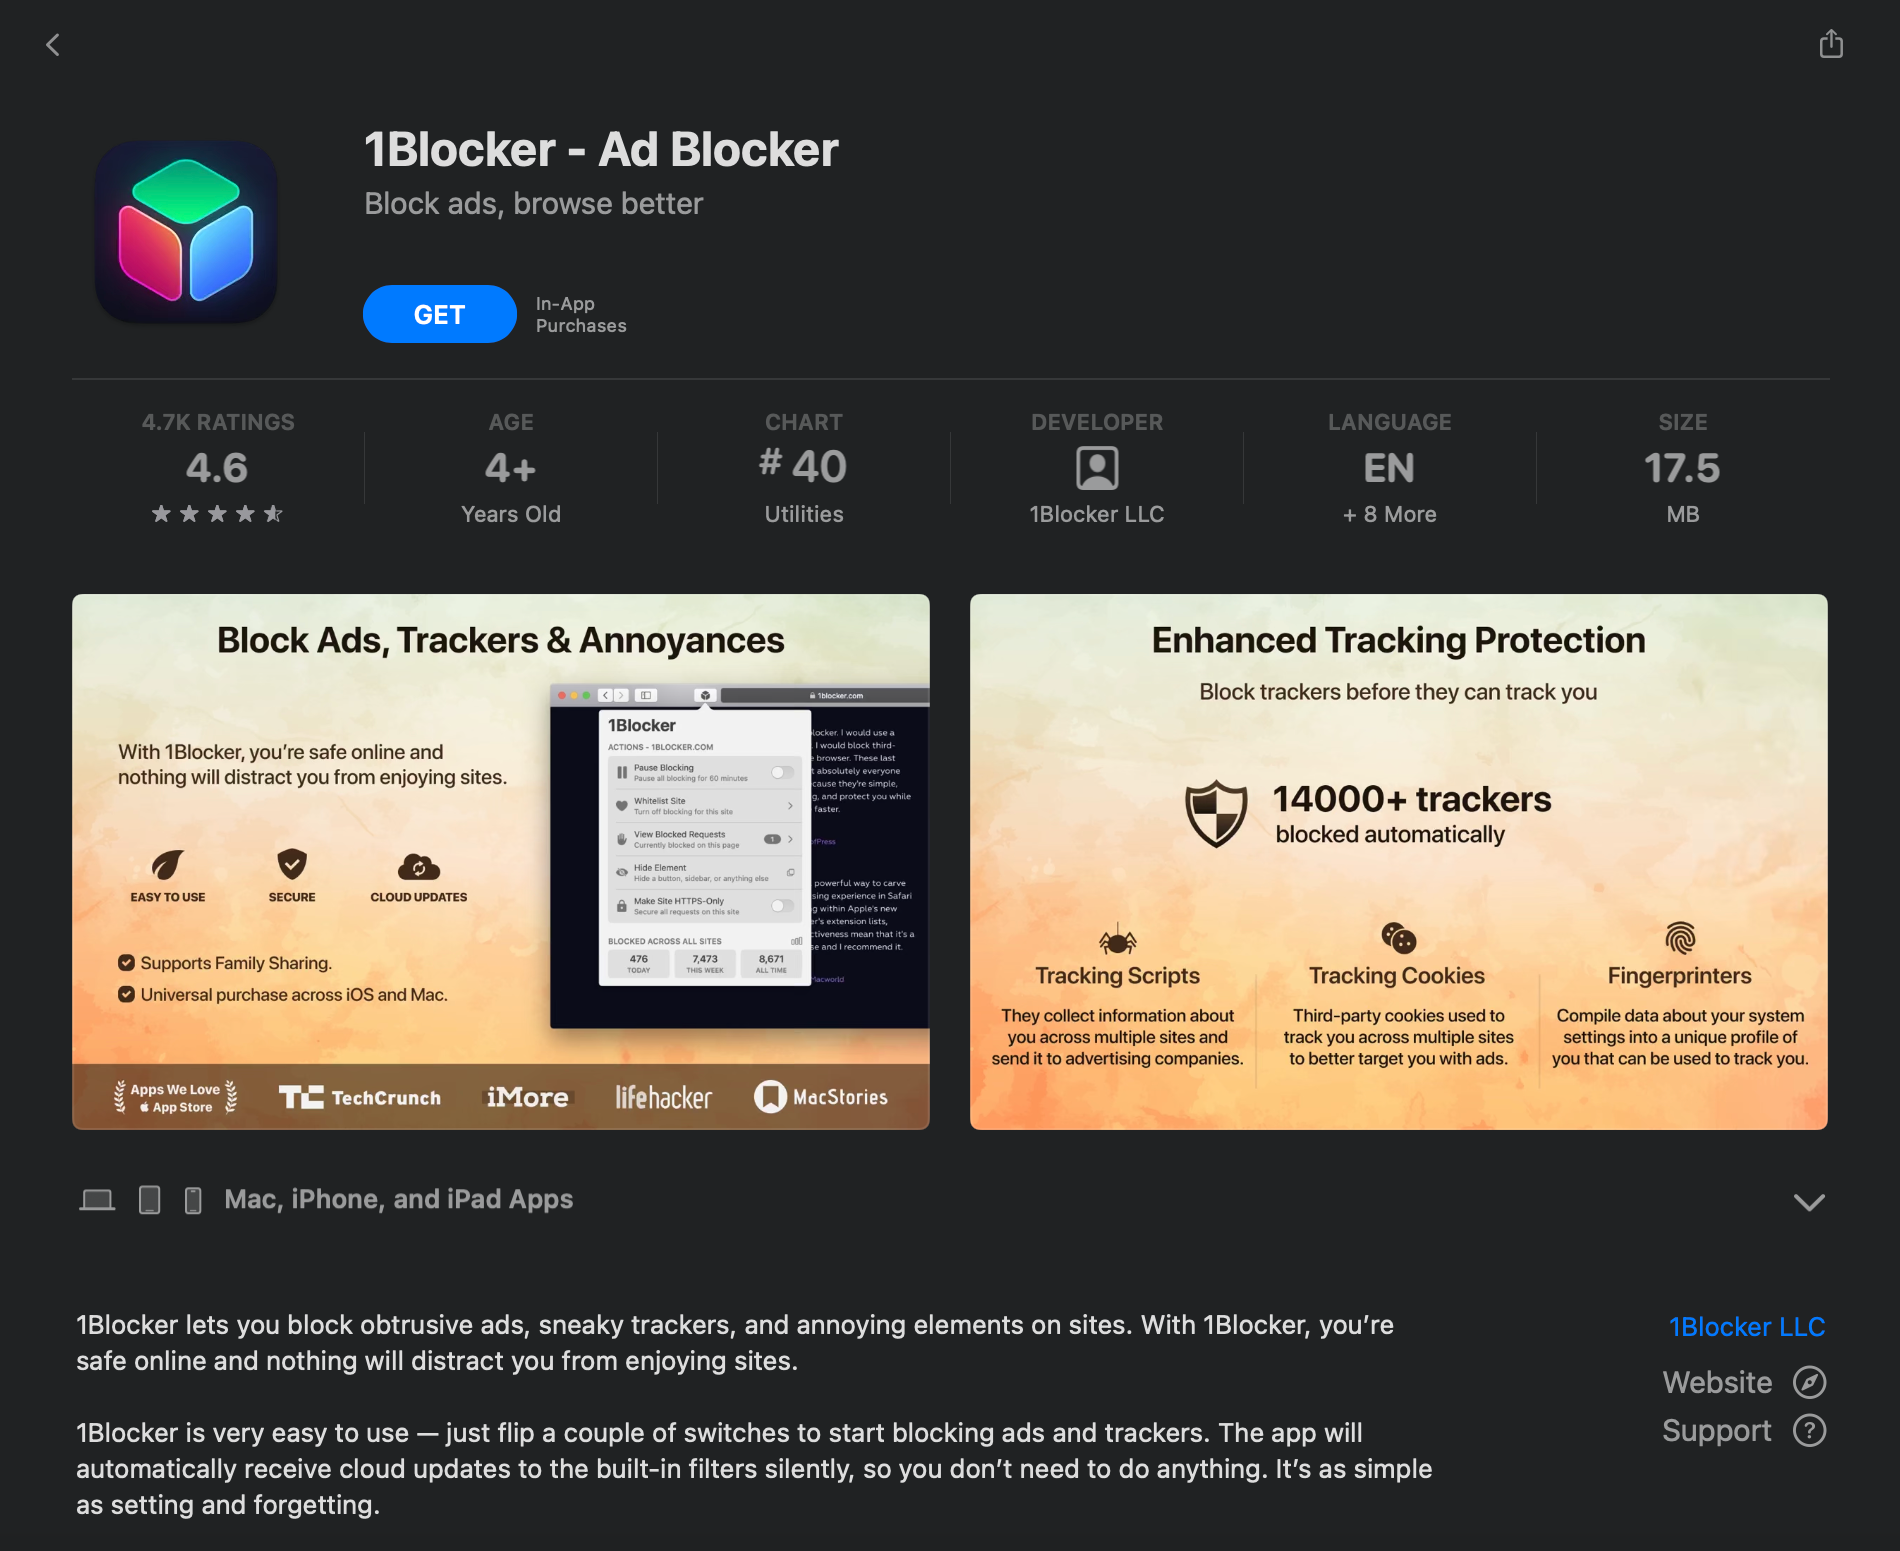 The Apple App Store page for 1Blocker - Ad Blocker.